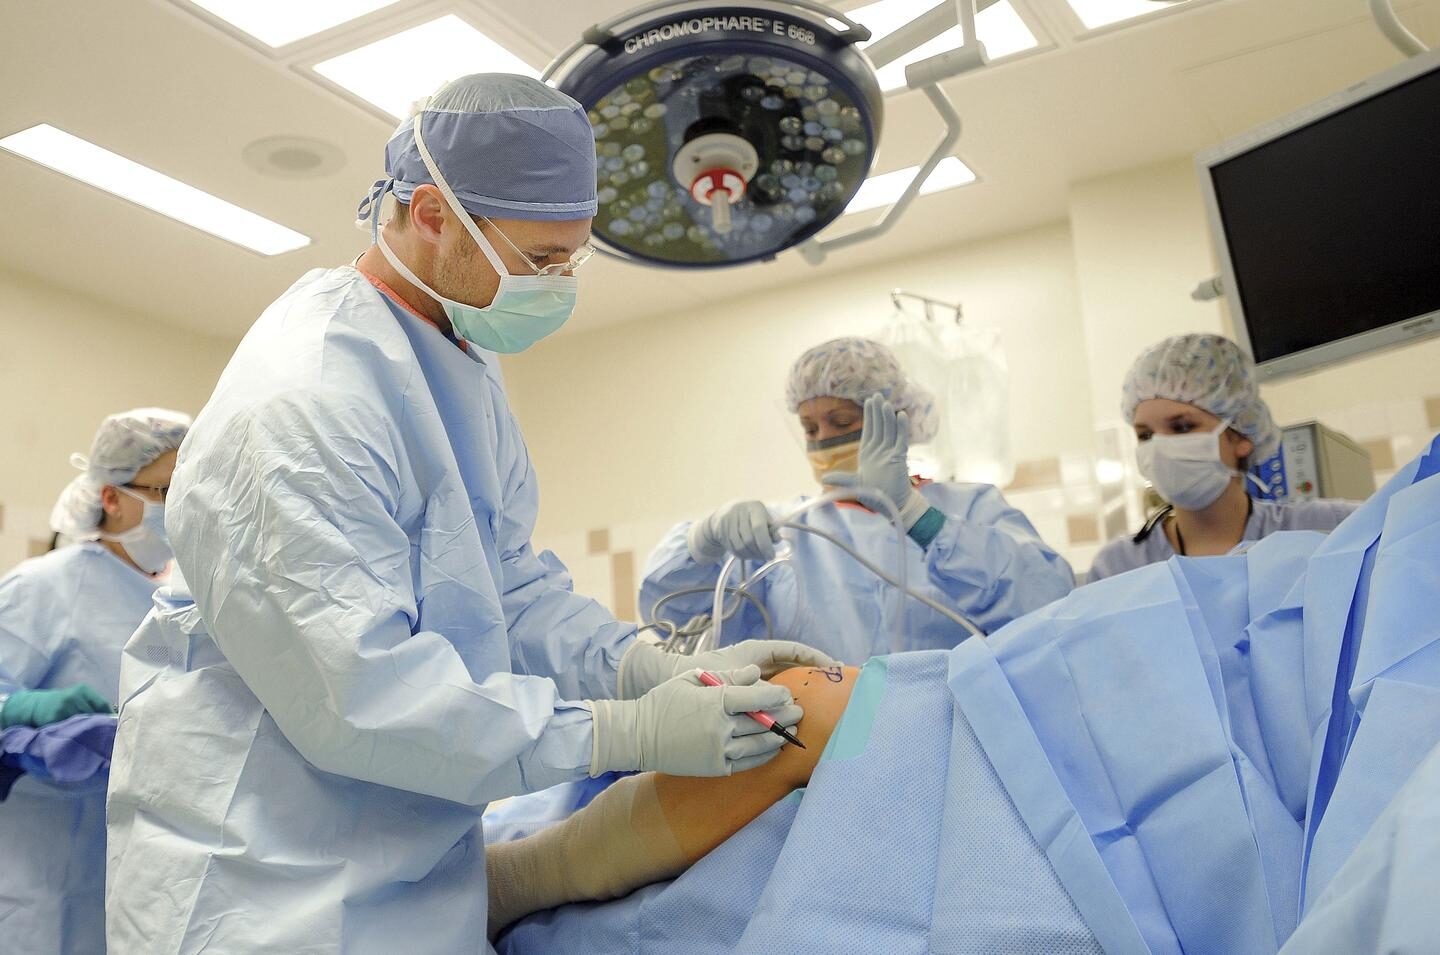 Surgeons Performing Surgery